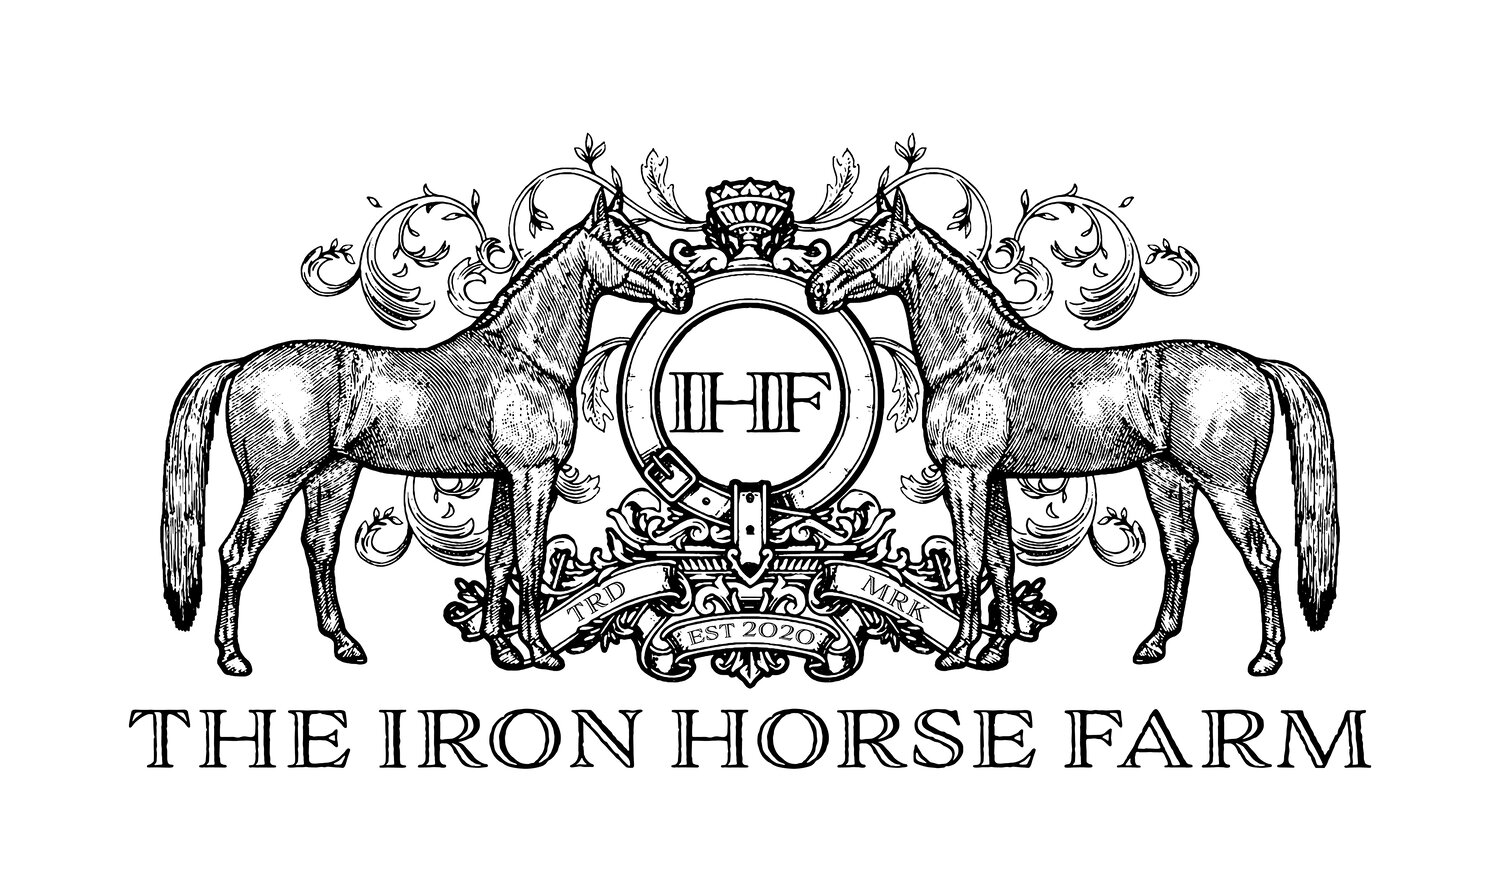 THE IRON HORSE FARM